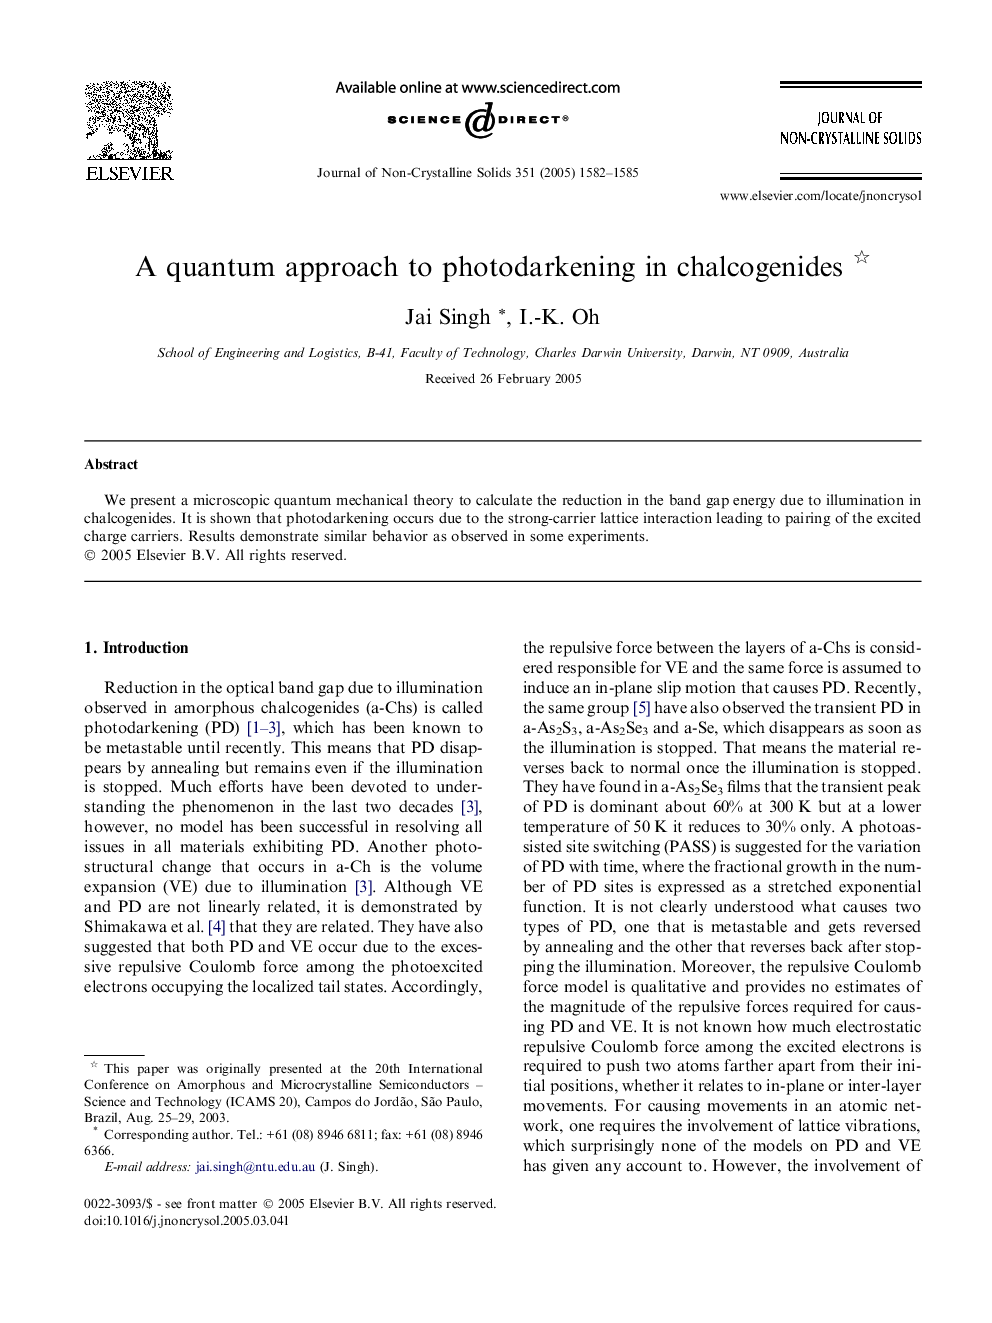 A quantum approach to photodarkening in chalcogenides